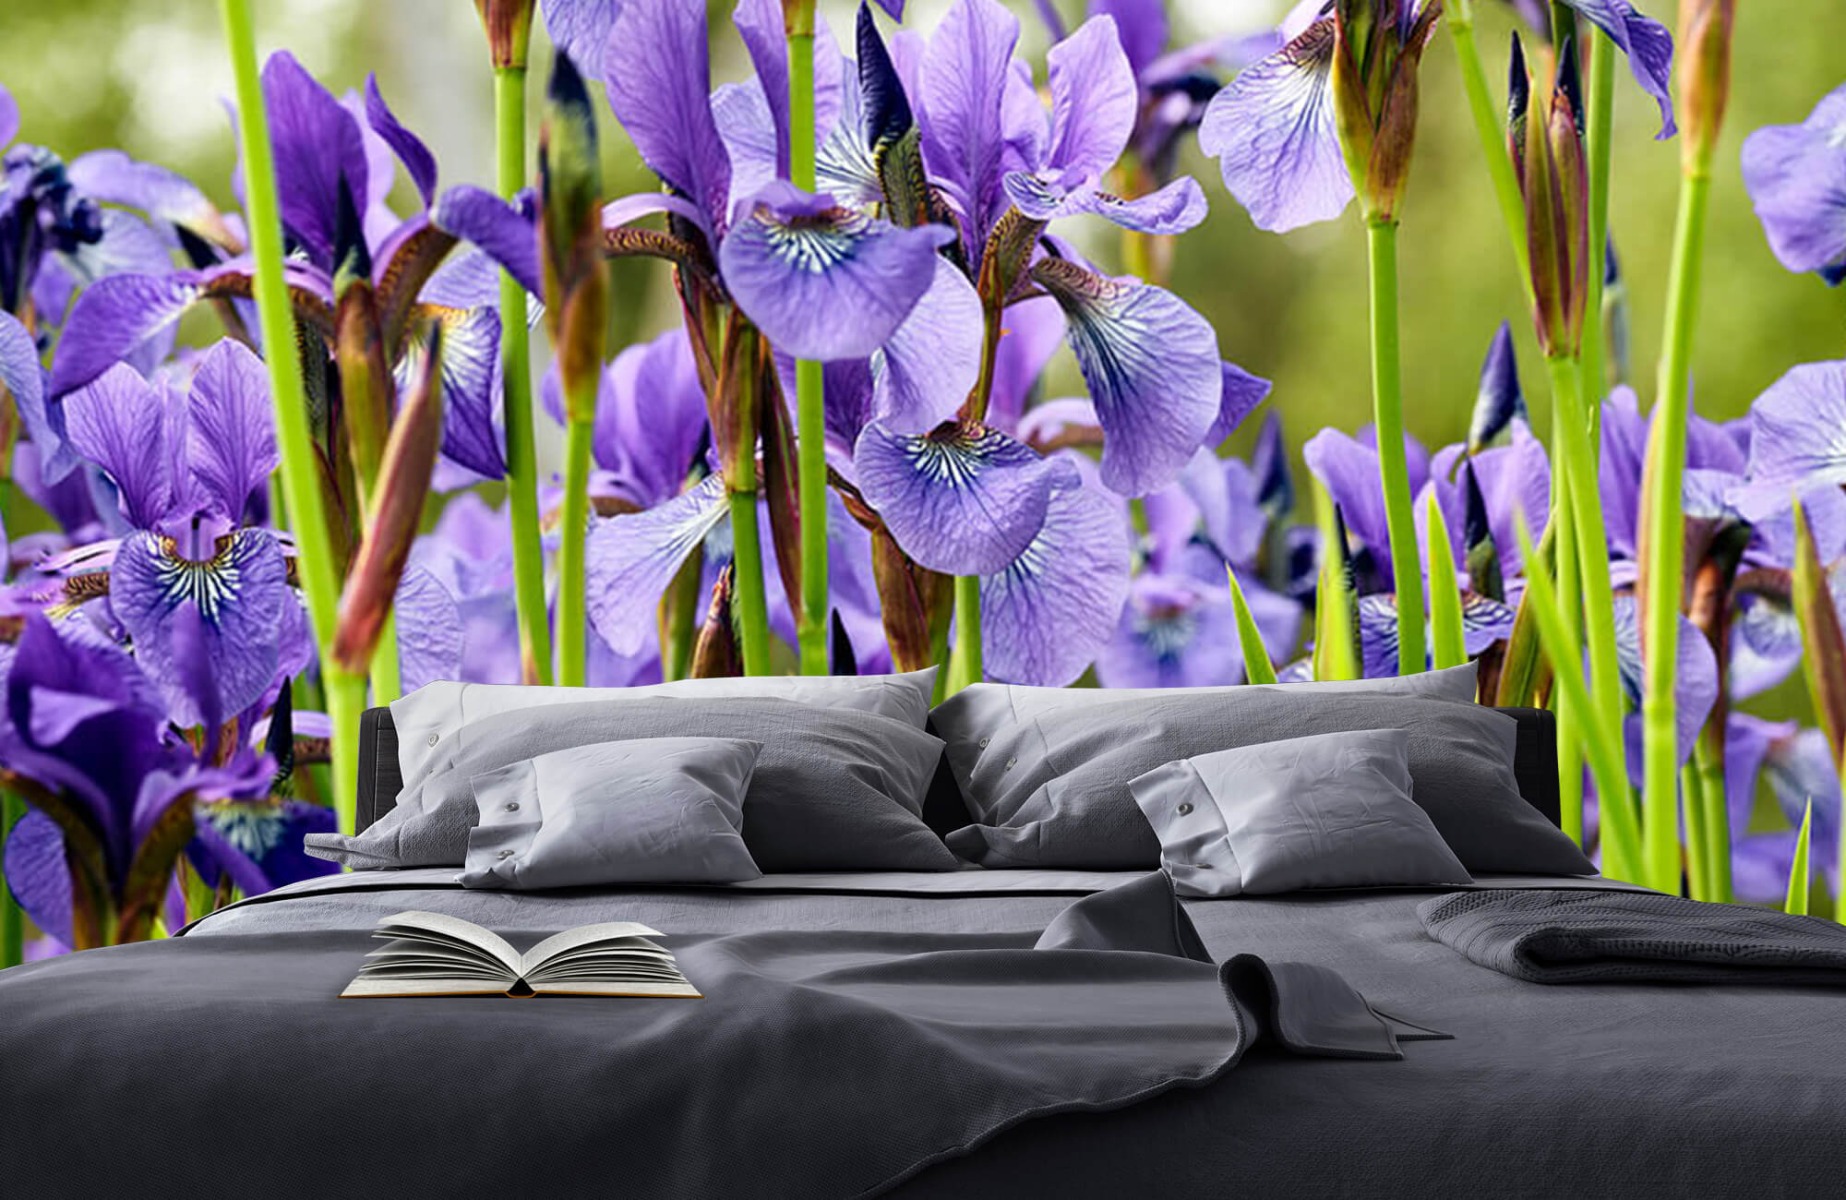 Flower fields - Irises  - Bedroom 18